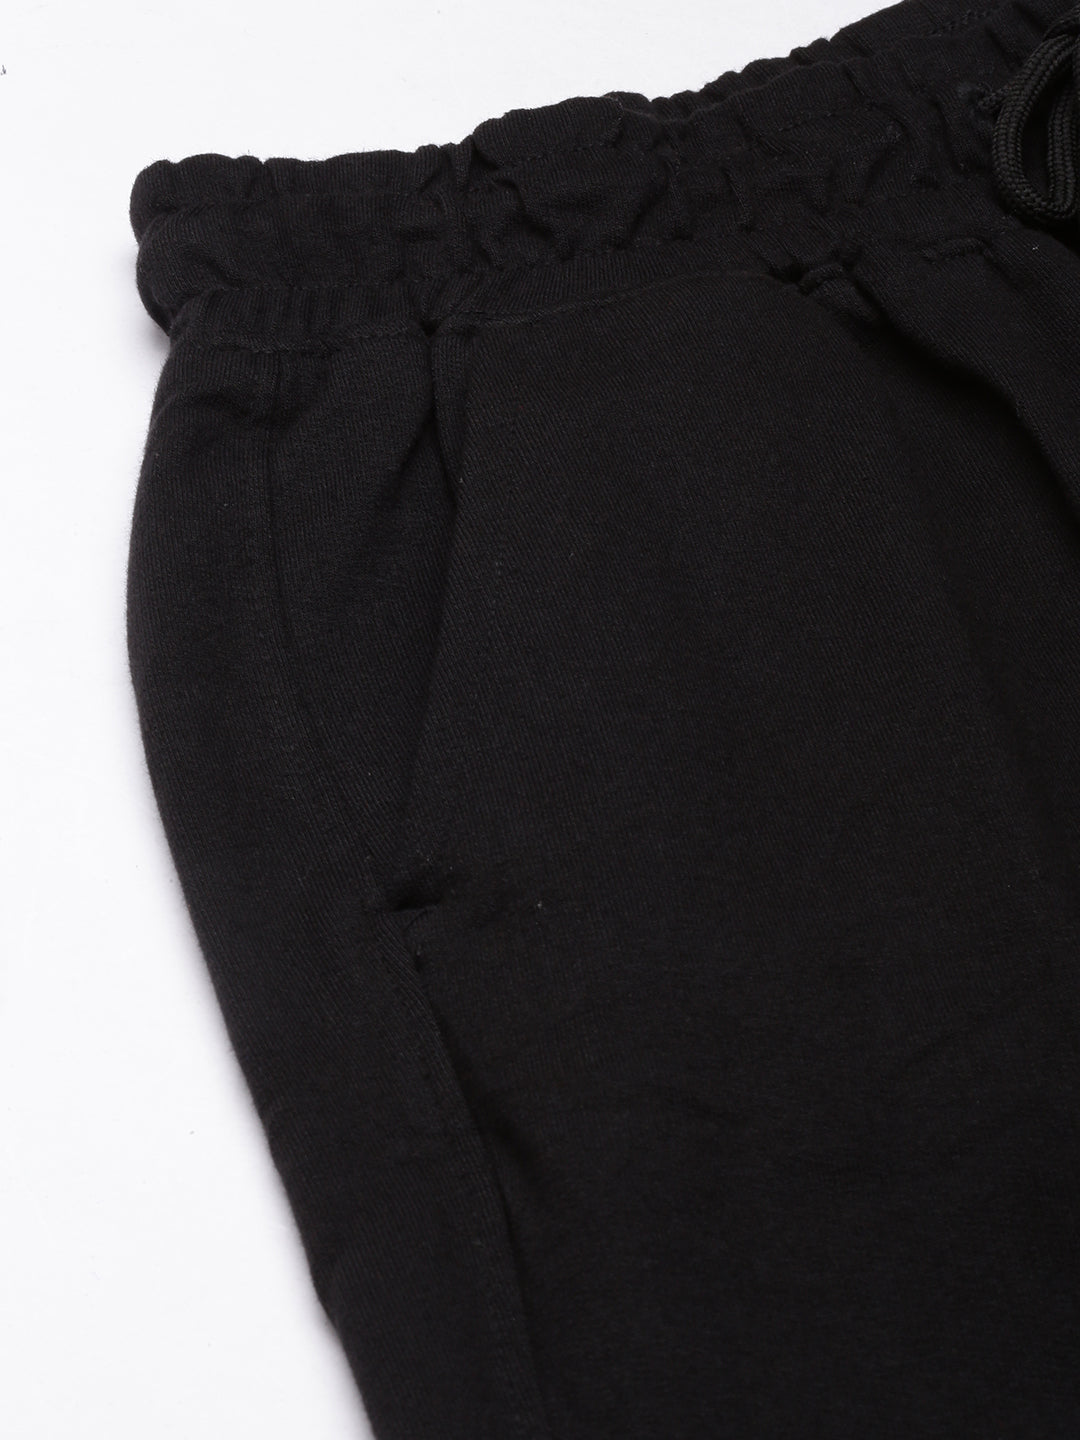 Printed Comfort Black Shorts